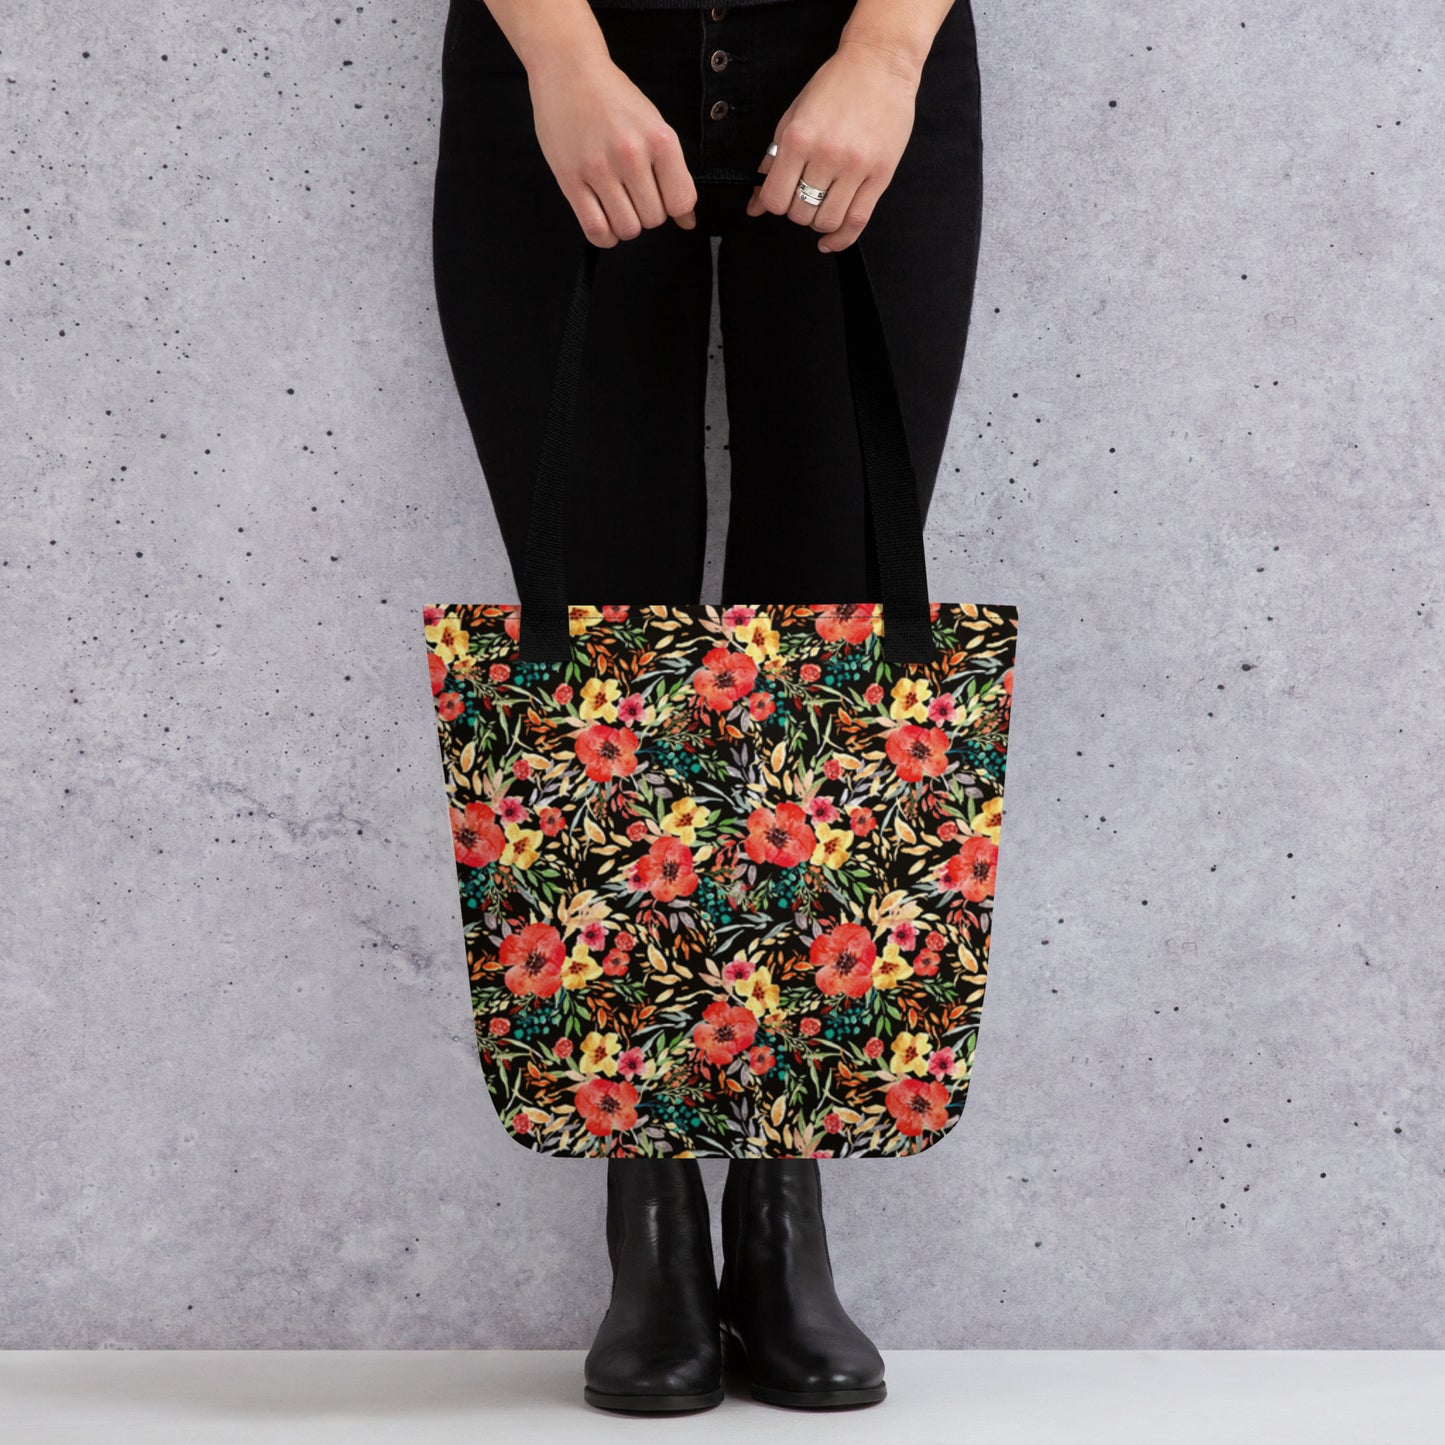 Premium Polyester Tote Bag - Midnight Bloom Print